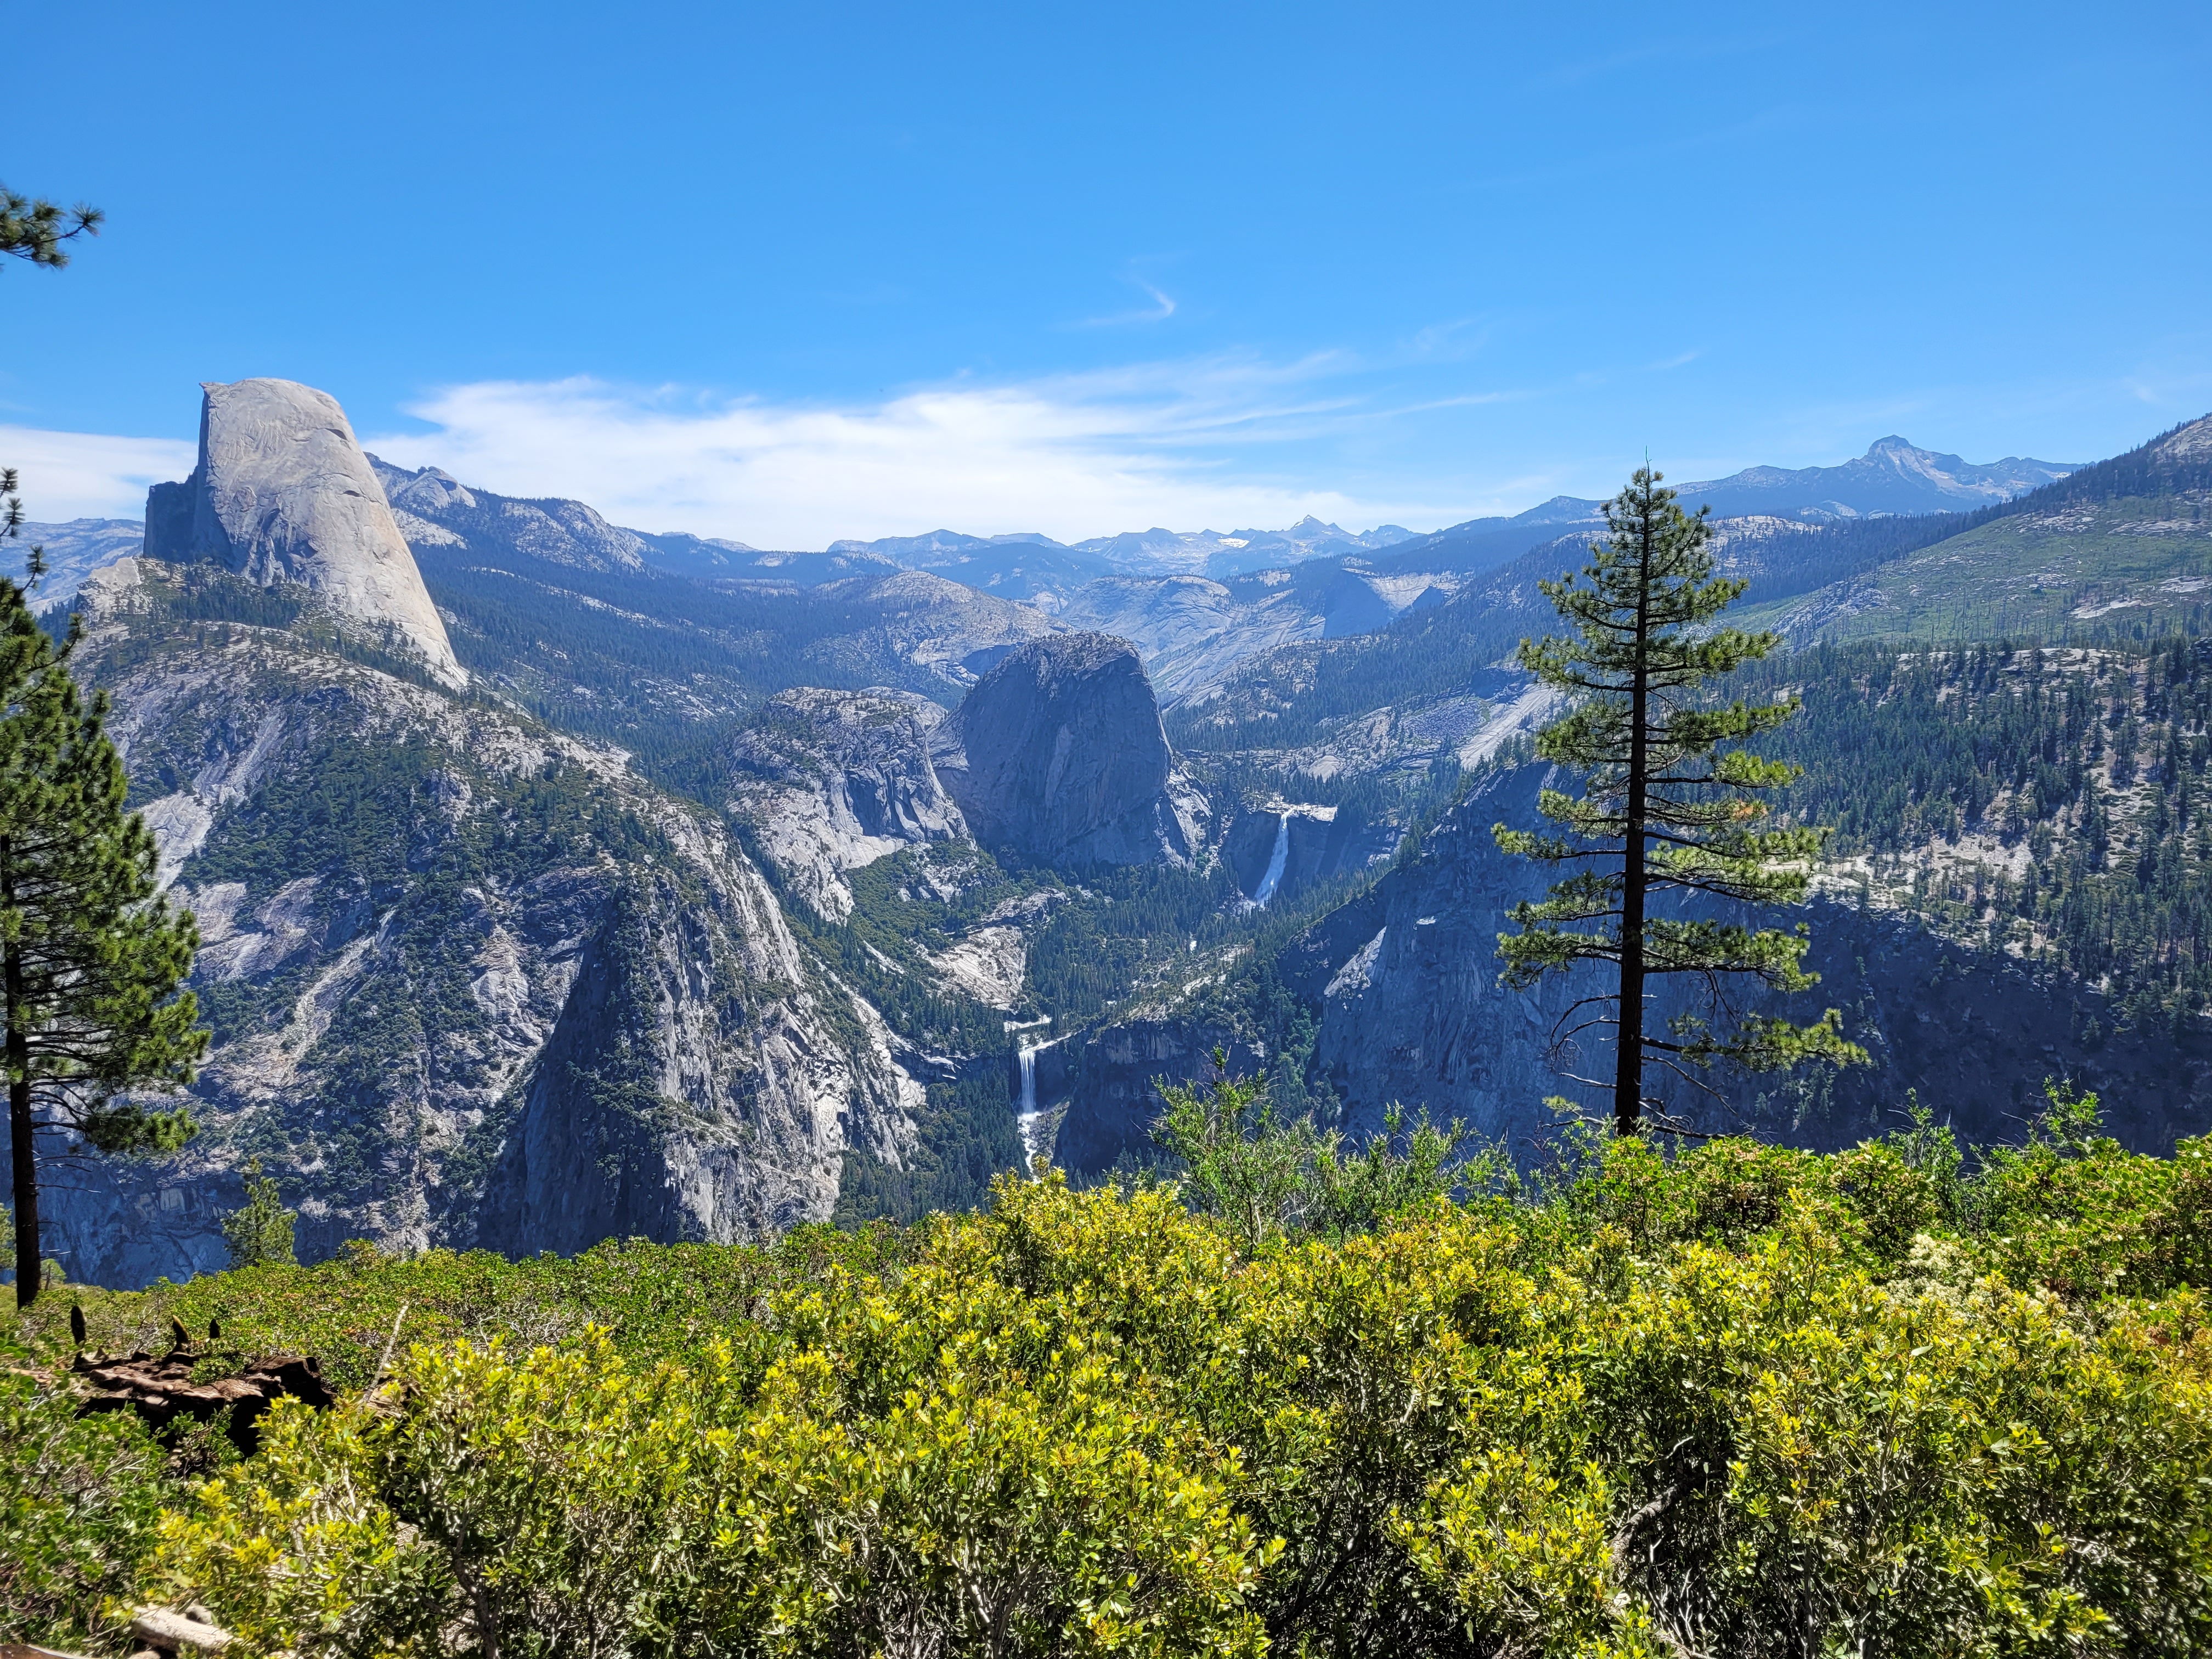 Yosemite Valley & Glacier Point Tour